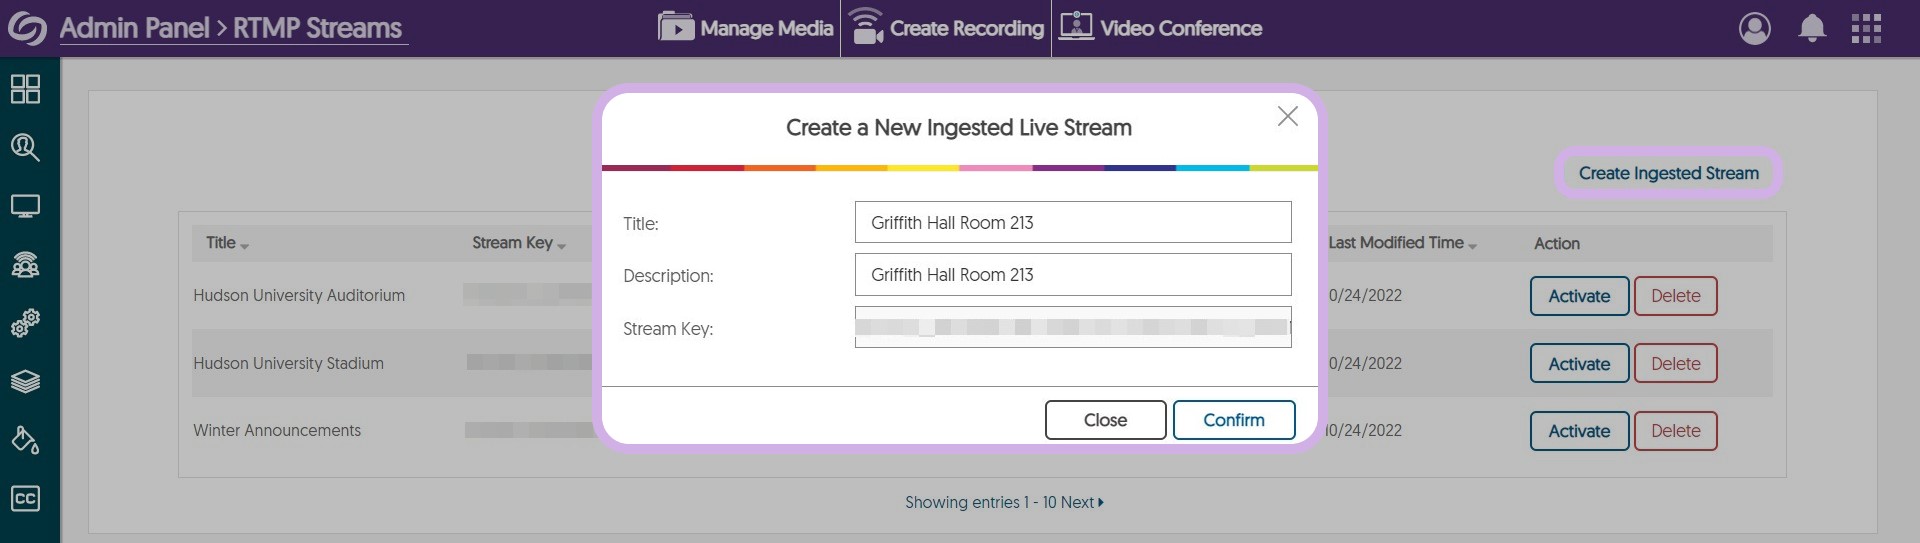 Create a New Ingested Live Stream window. 